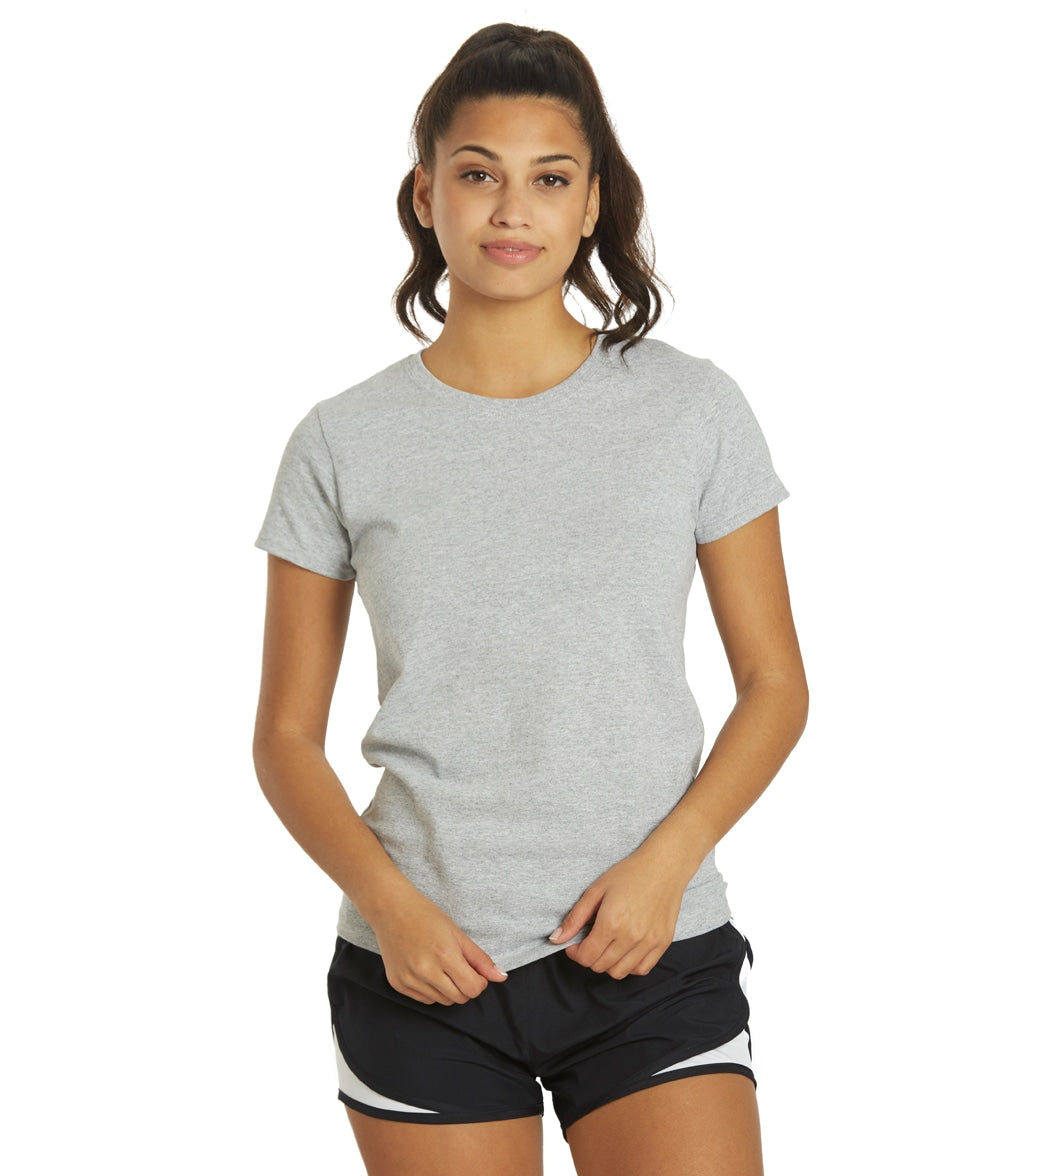 SwimOutlet Womens Cotton Missy Fit T-Shirt